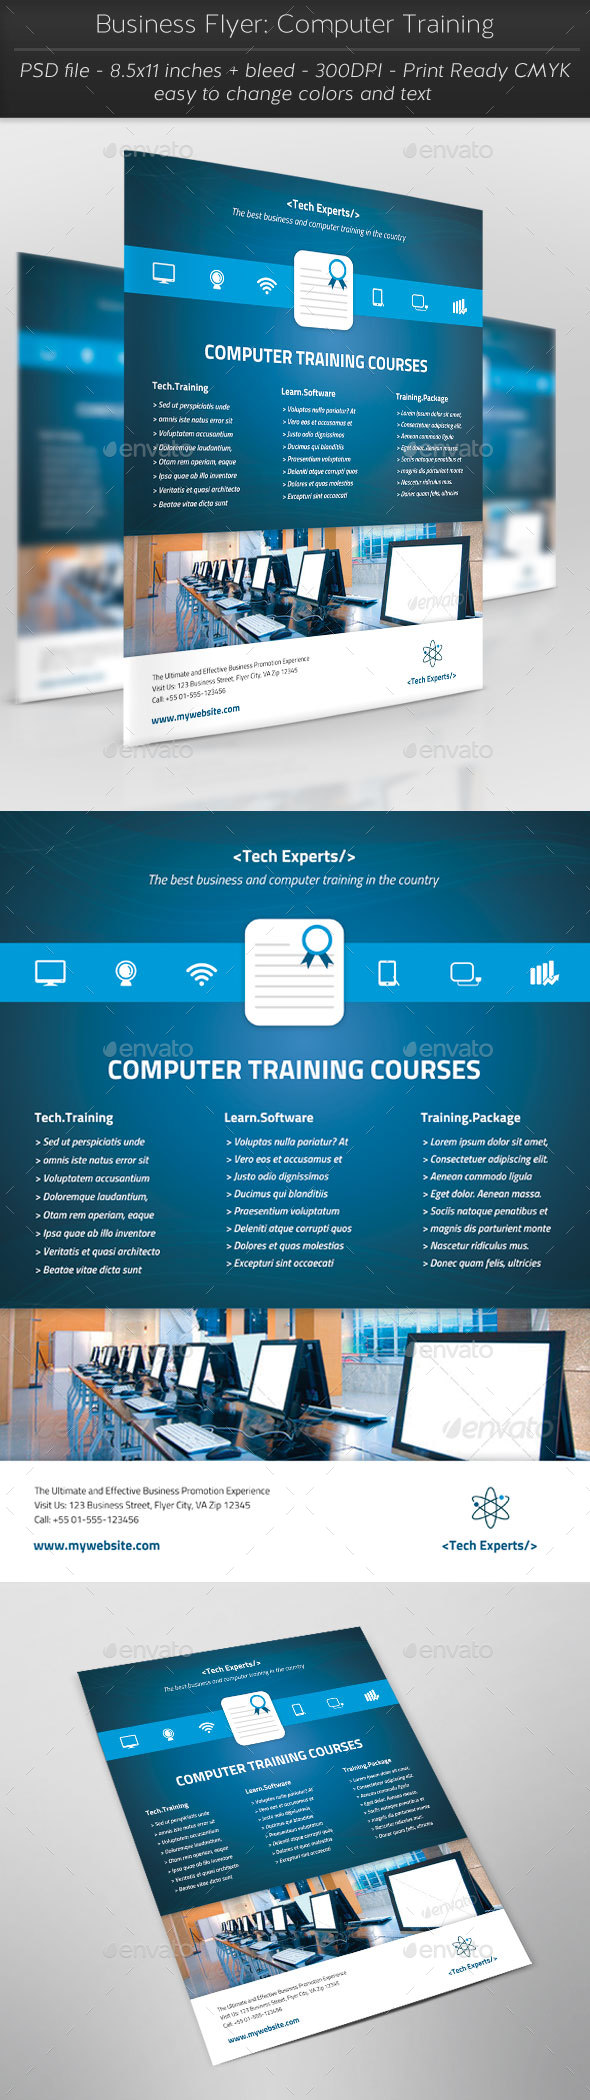 Business Flyer: Computer Training